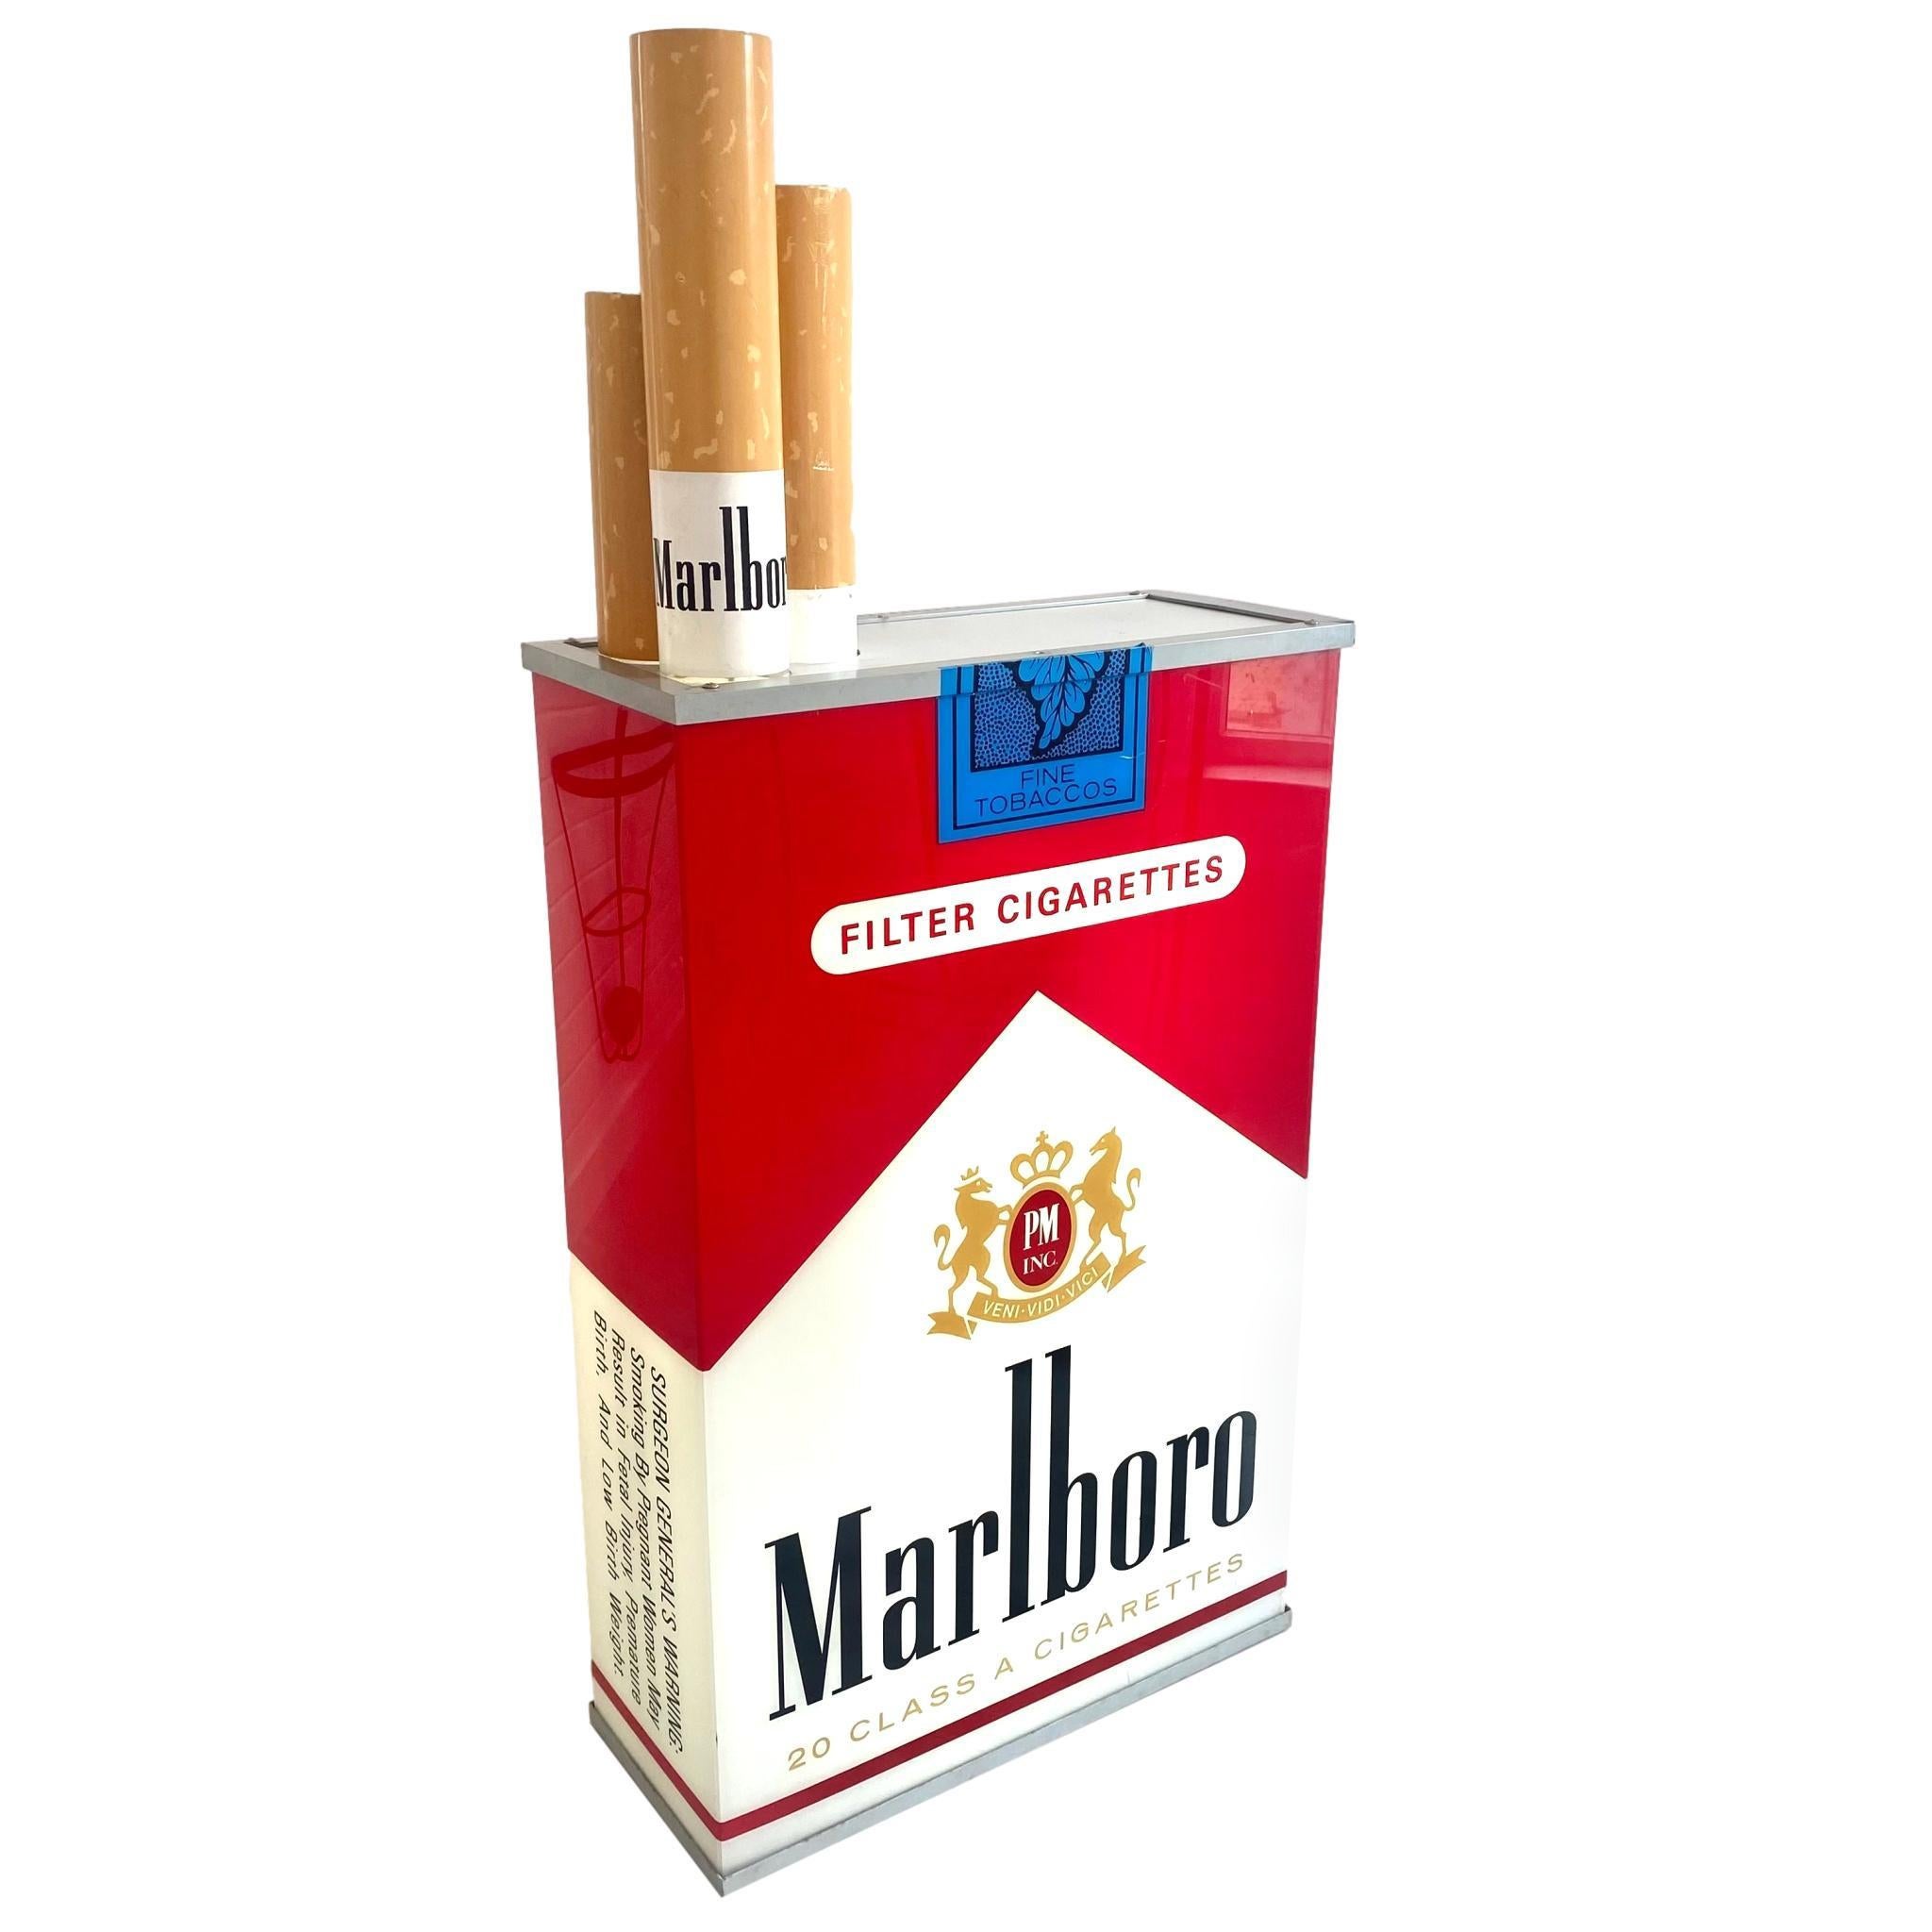 Double Sided Vintage Marlboro Light Up Cigarette Pack, 1990s USA